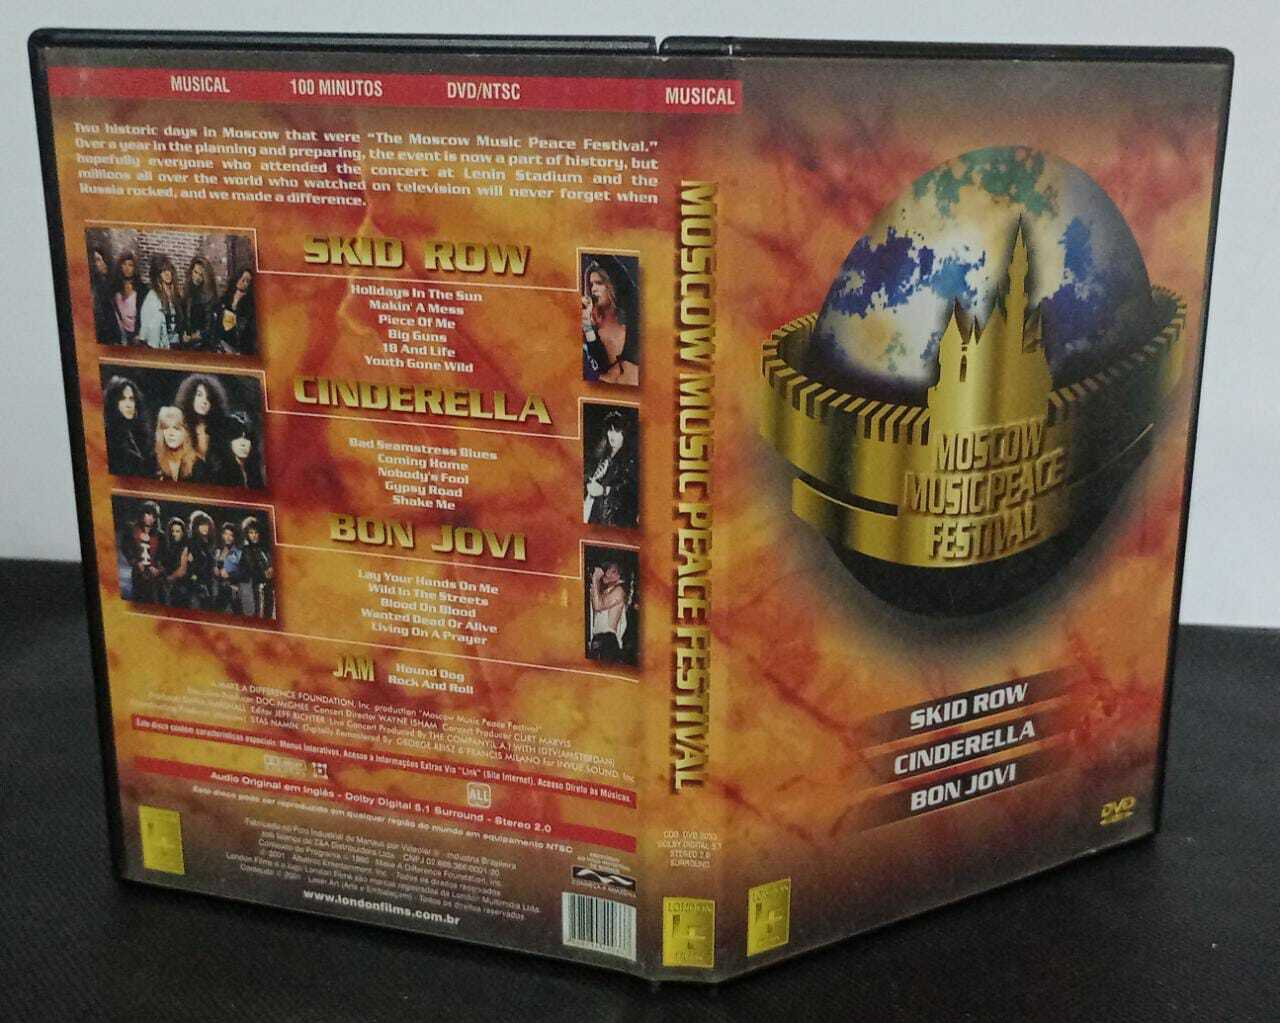 DVD - Bon Jovi, Skid Row and Cinderella - Moscow Music Peace Festival